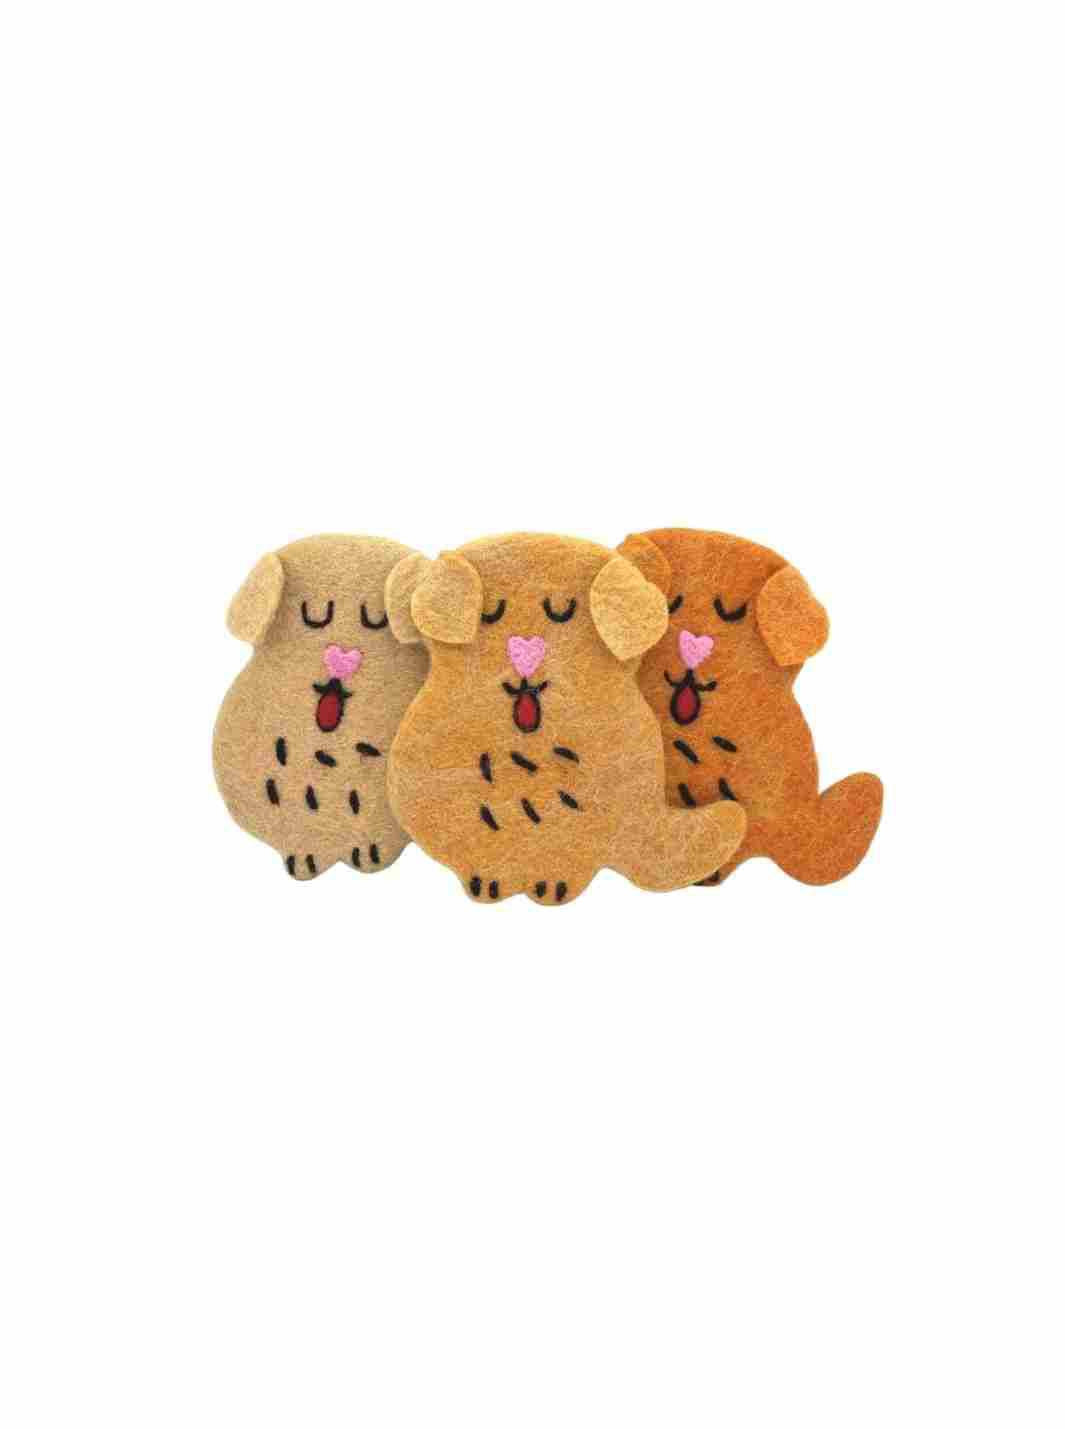 Eco Coasters | DYO Gift Box - Coasters | Eco Dog Coasters | Eco Cat Coasters | British Shorthair Cat Coasters | Golden Retriever Dog Coasters | Eco-Friendly Gifts | Eco Dog & Cat